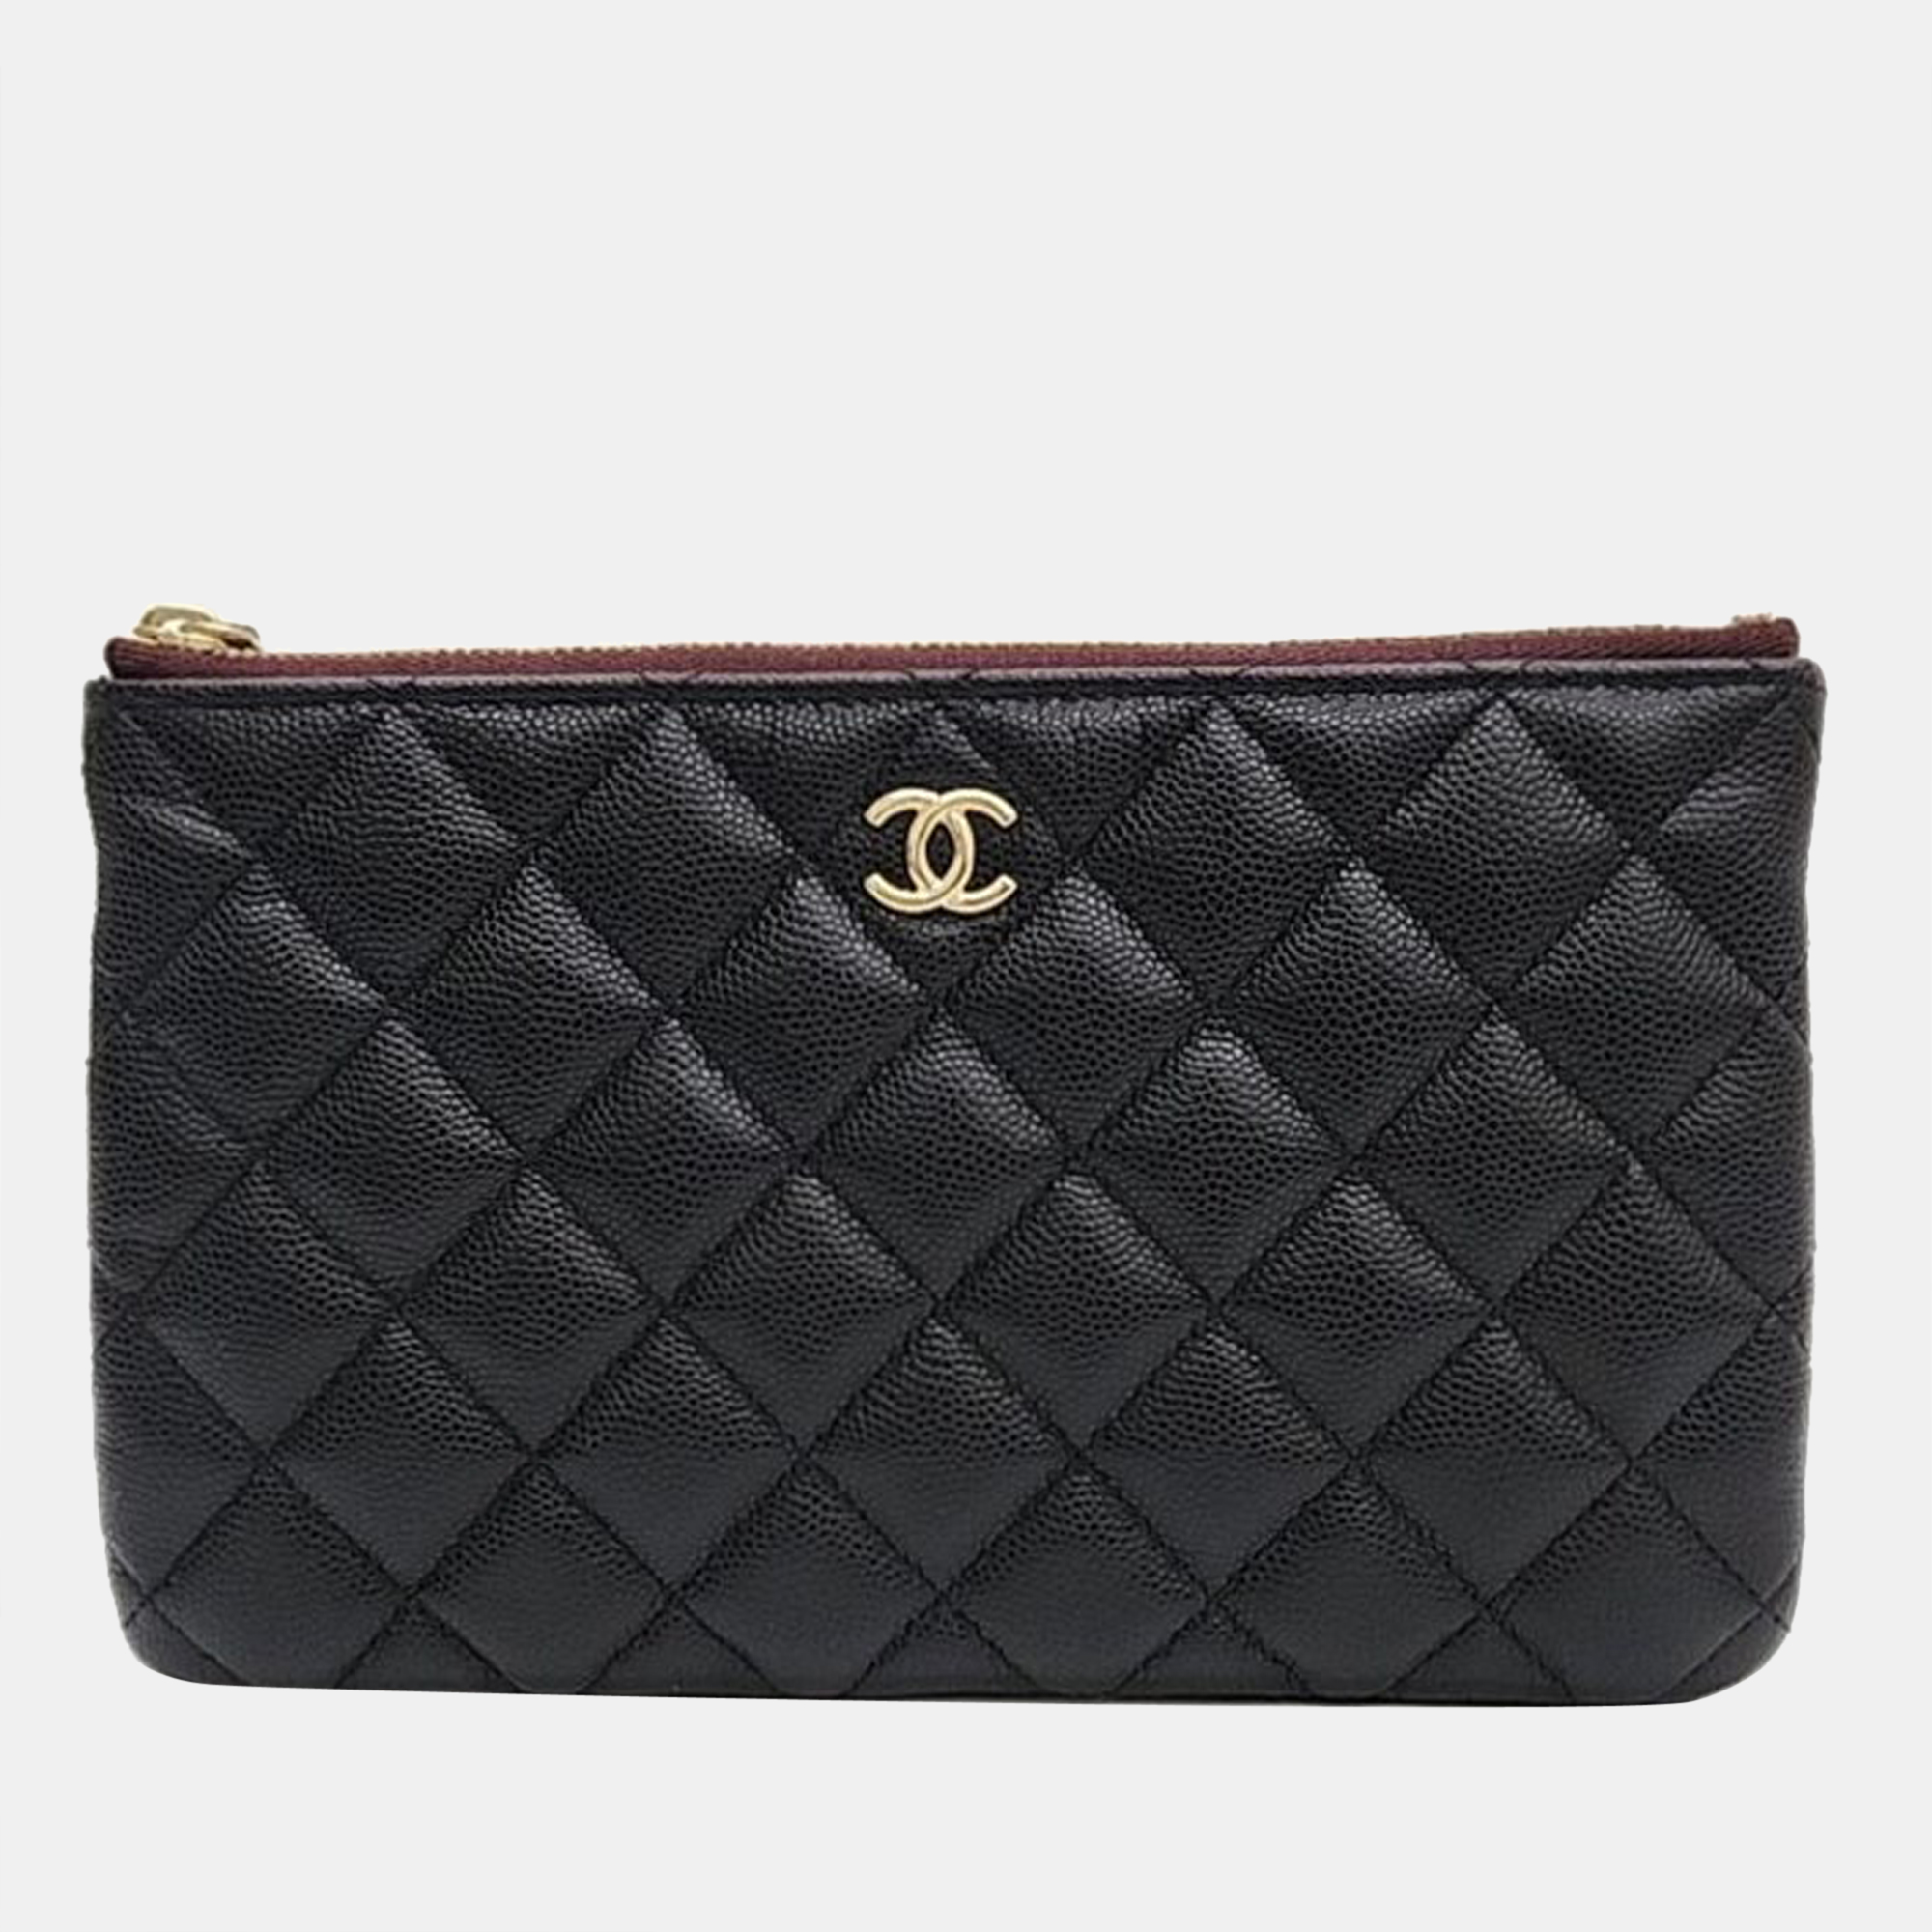 Chanel Black Caviar Leather O Case Clutch Bag